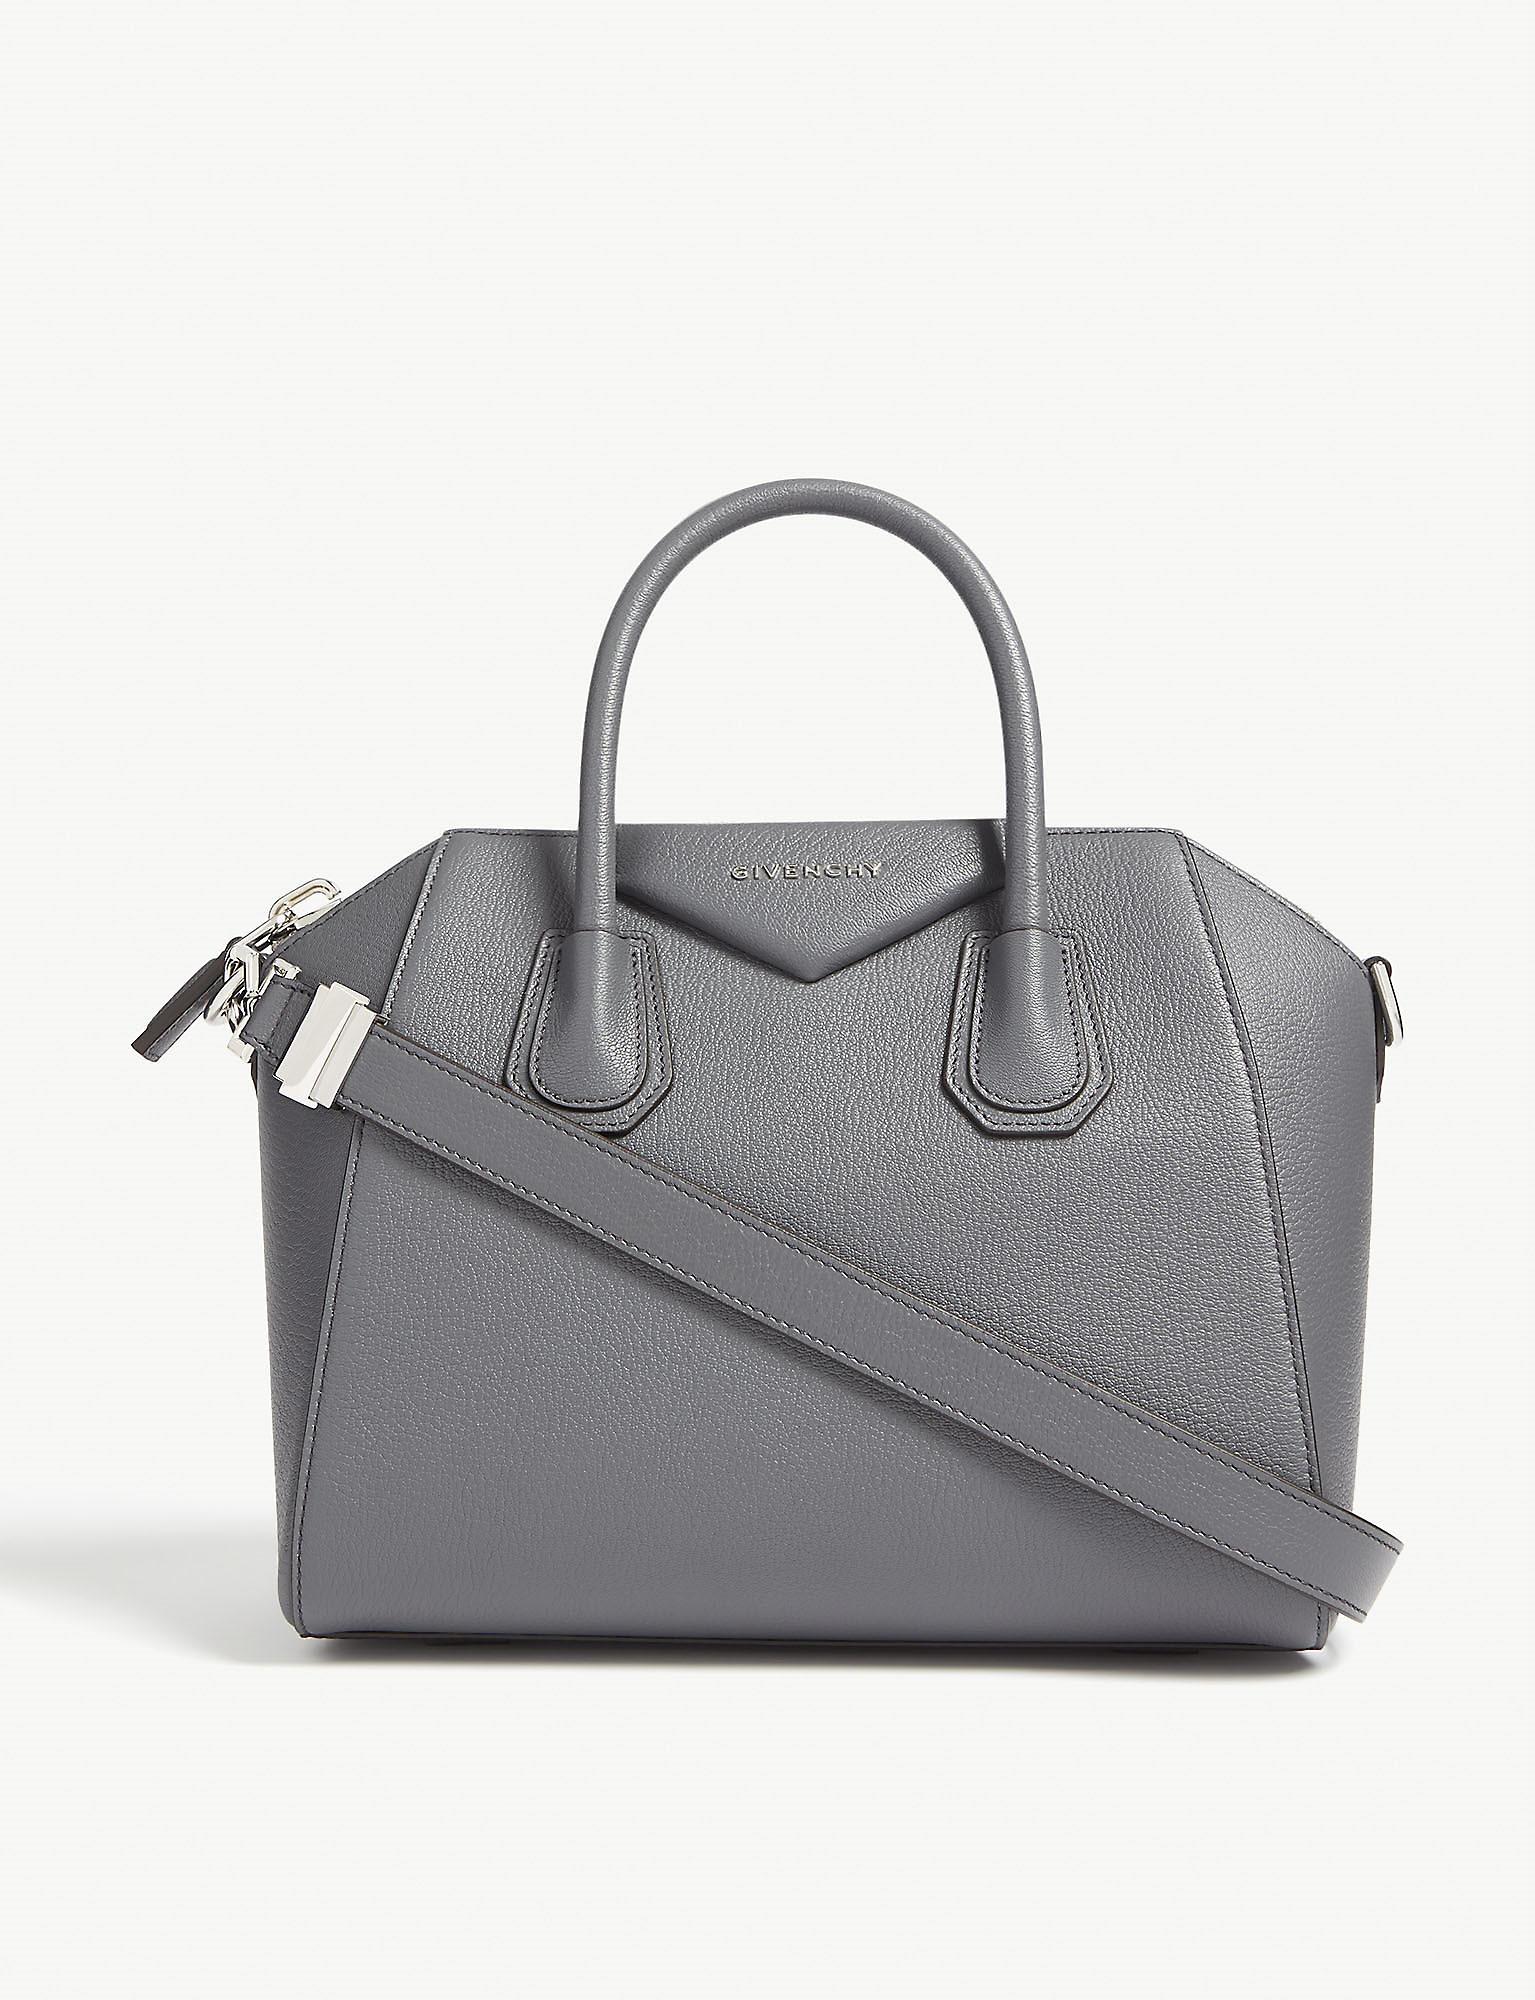 Givenchy Antigona Sugar Small Leather Tote Bag in Gray - Lyst